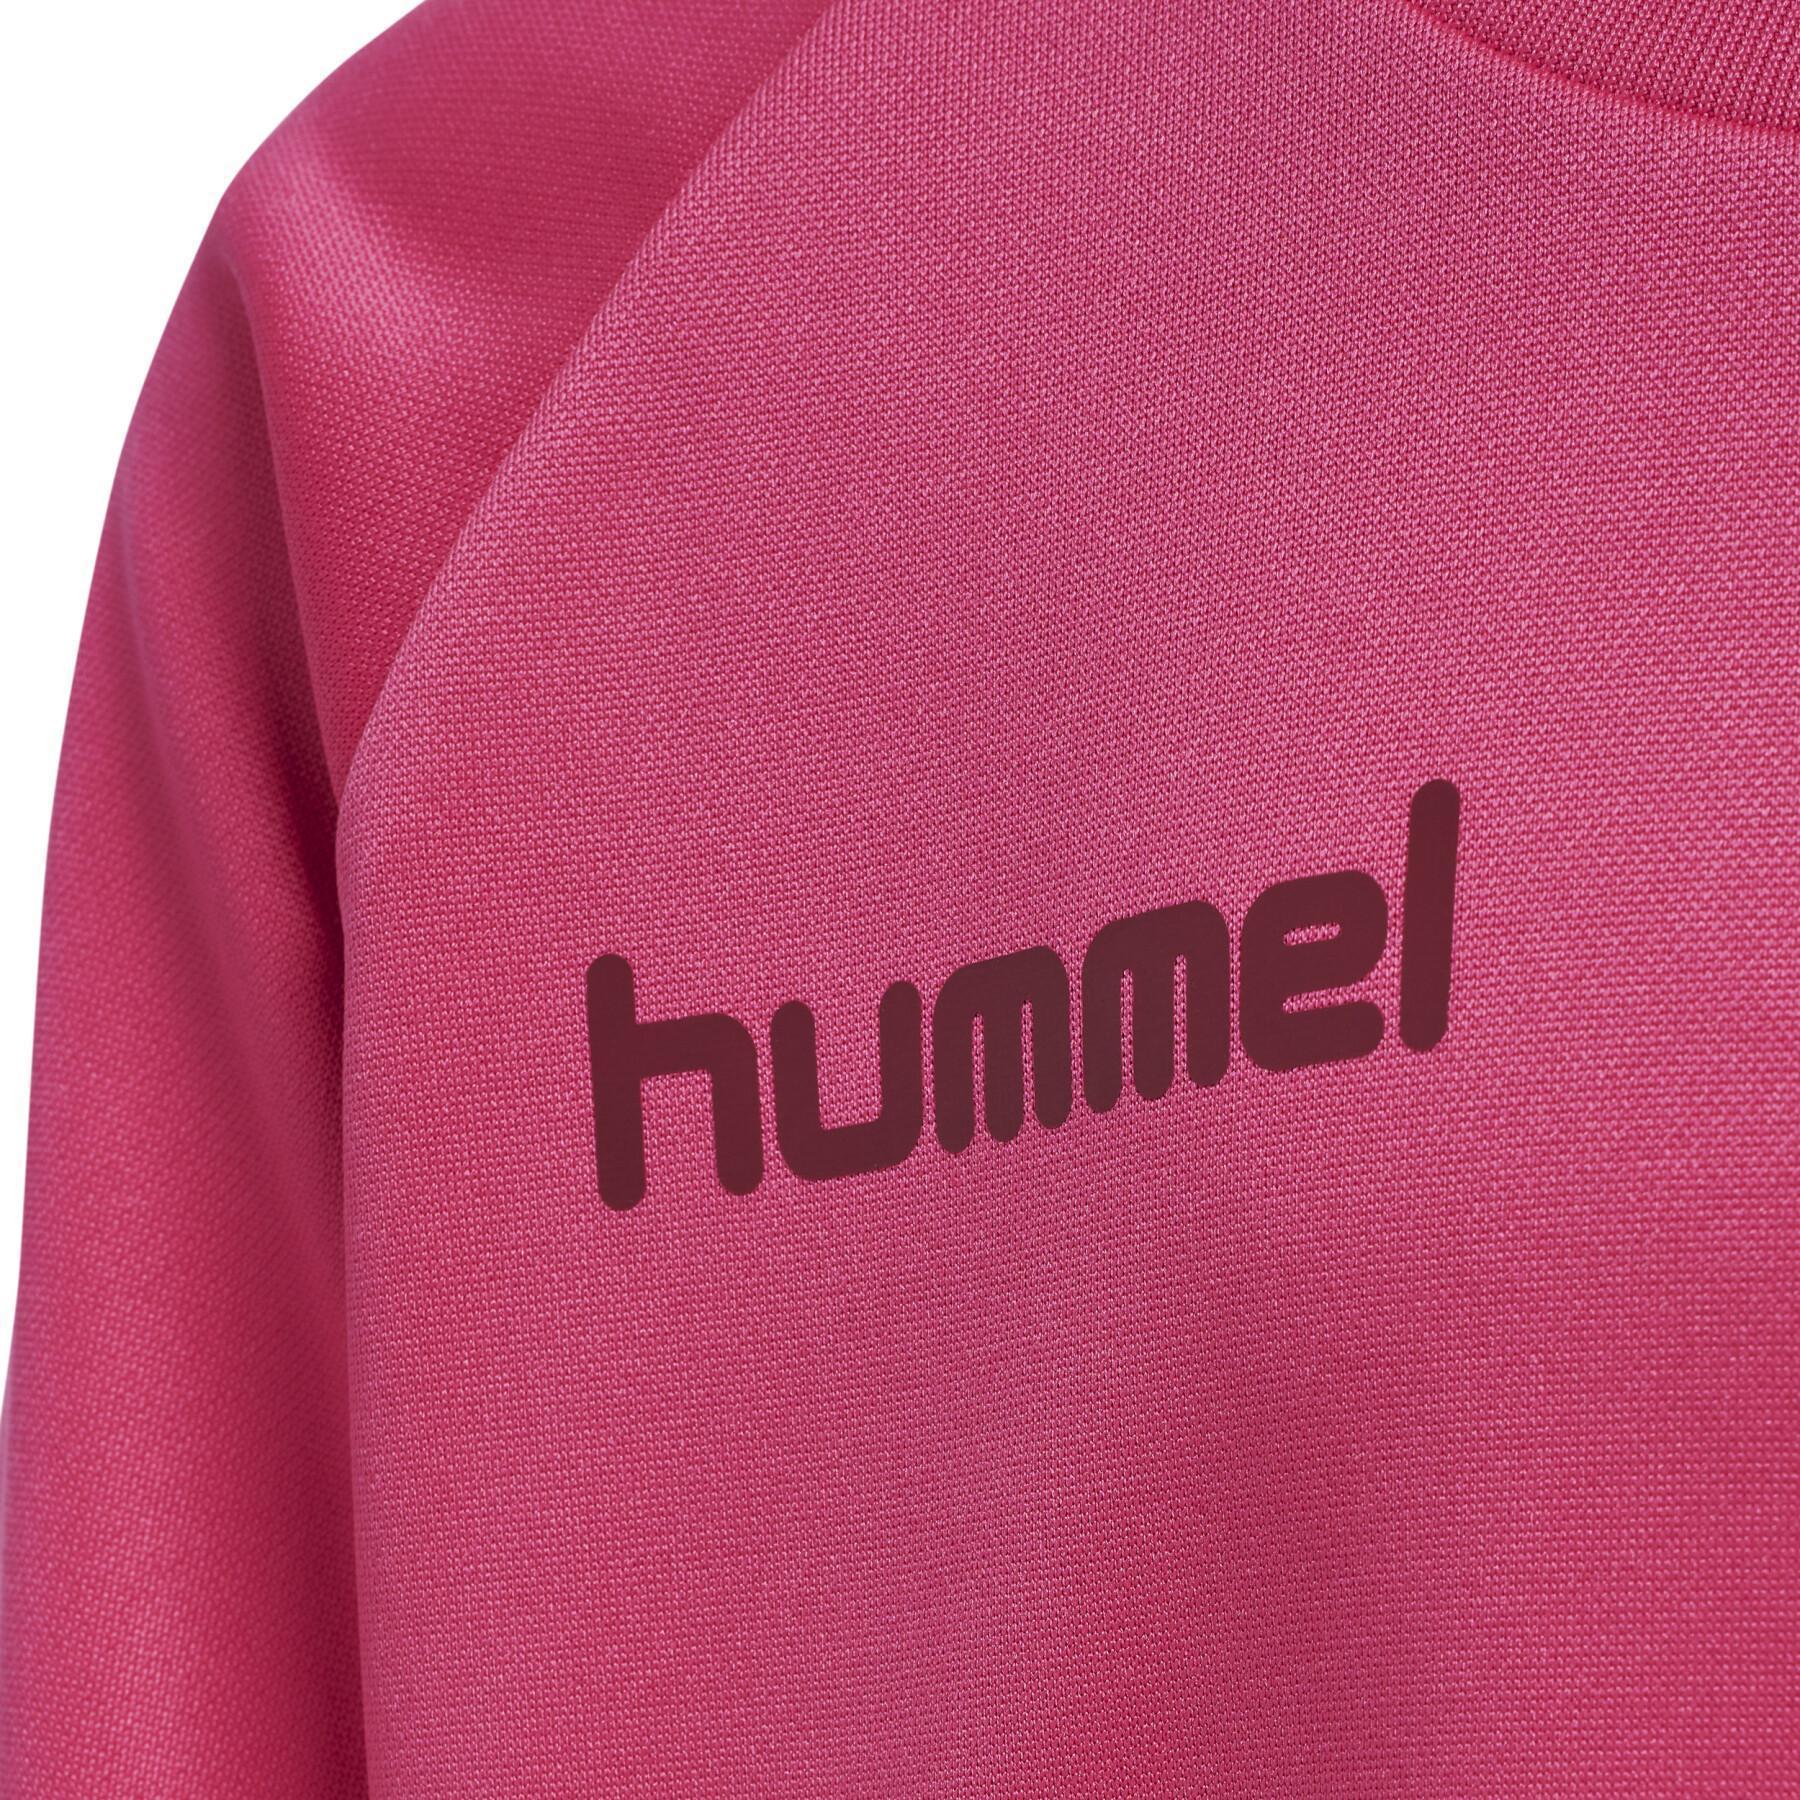 Sweatshirt polyester enfant Hummel Promo